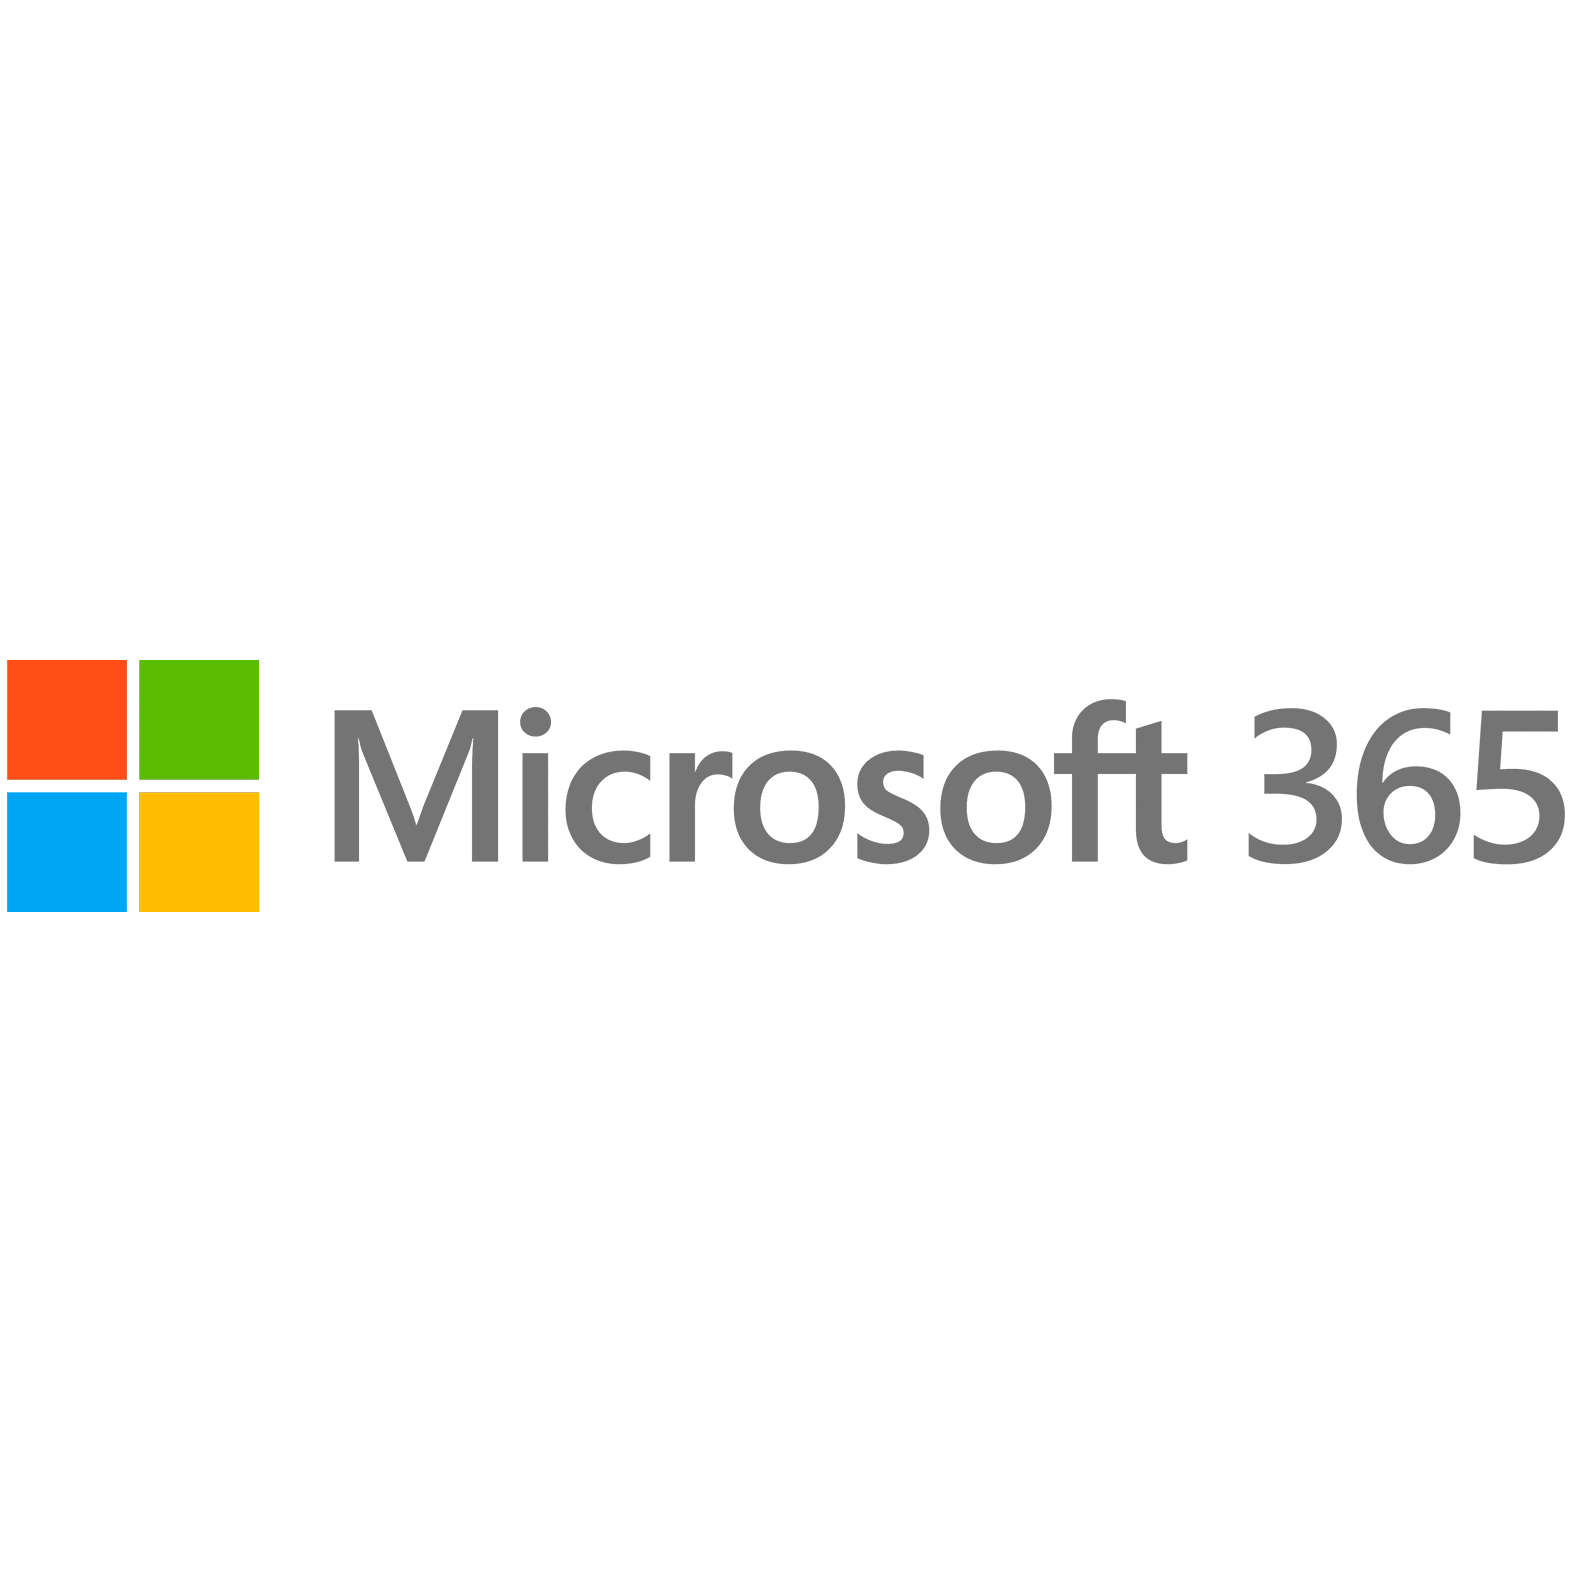 Microsoft 365 logo a vendor of zirous cloud managed services